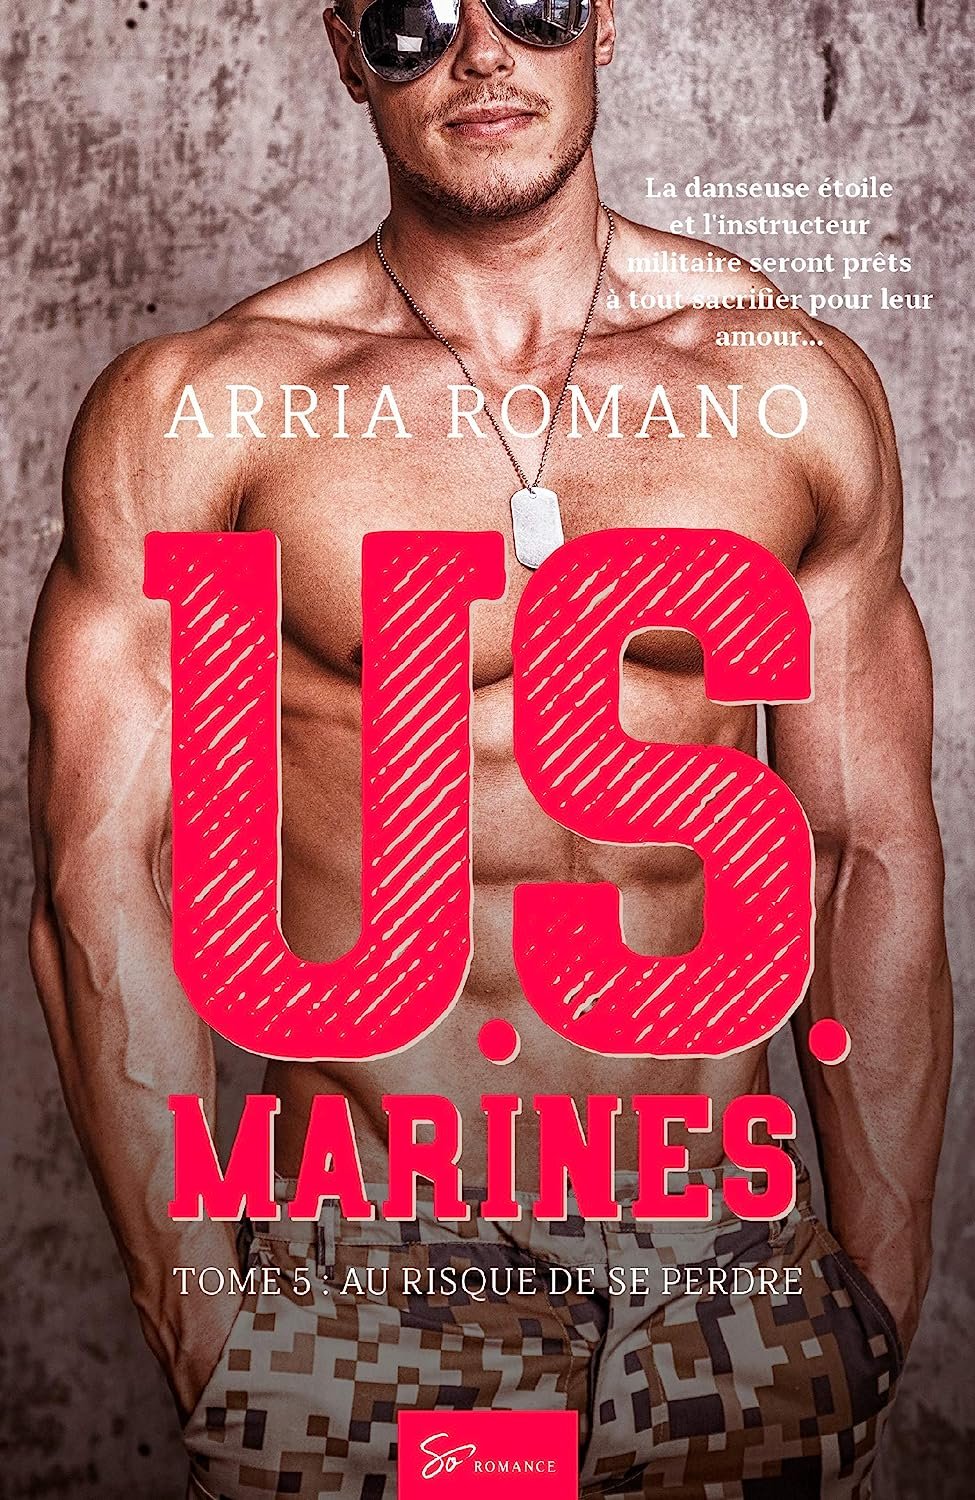 Arria Romano – U.S. Marines - Tome 5: Au risque de se perdre